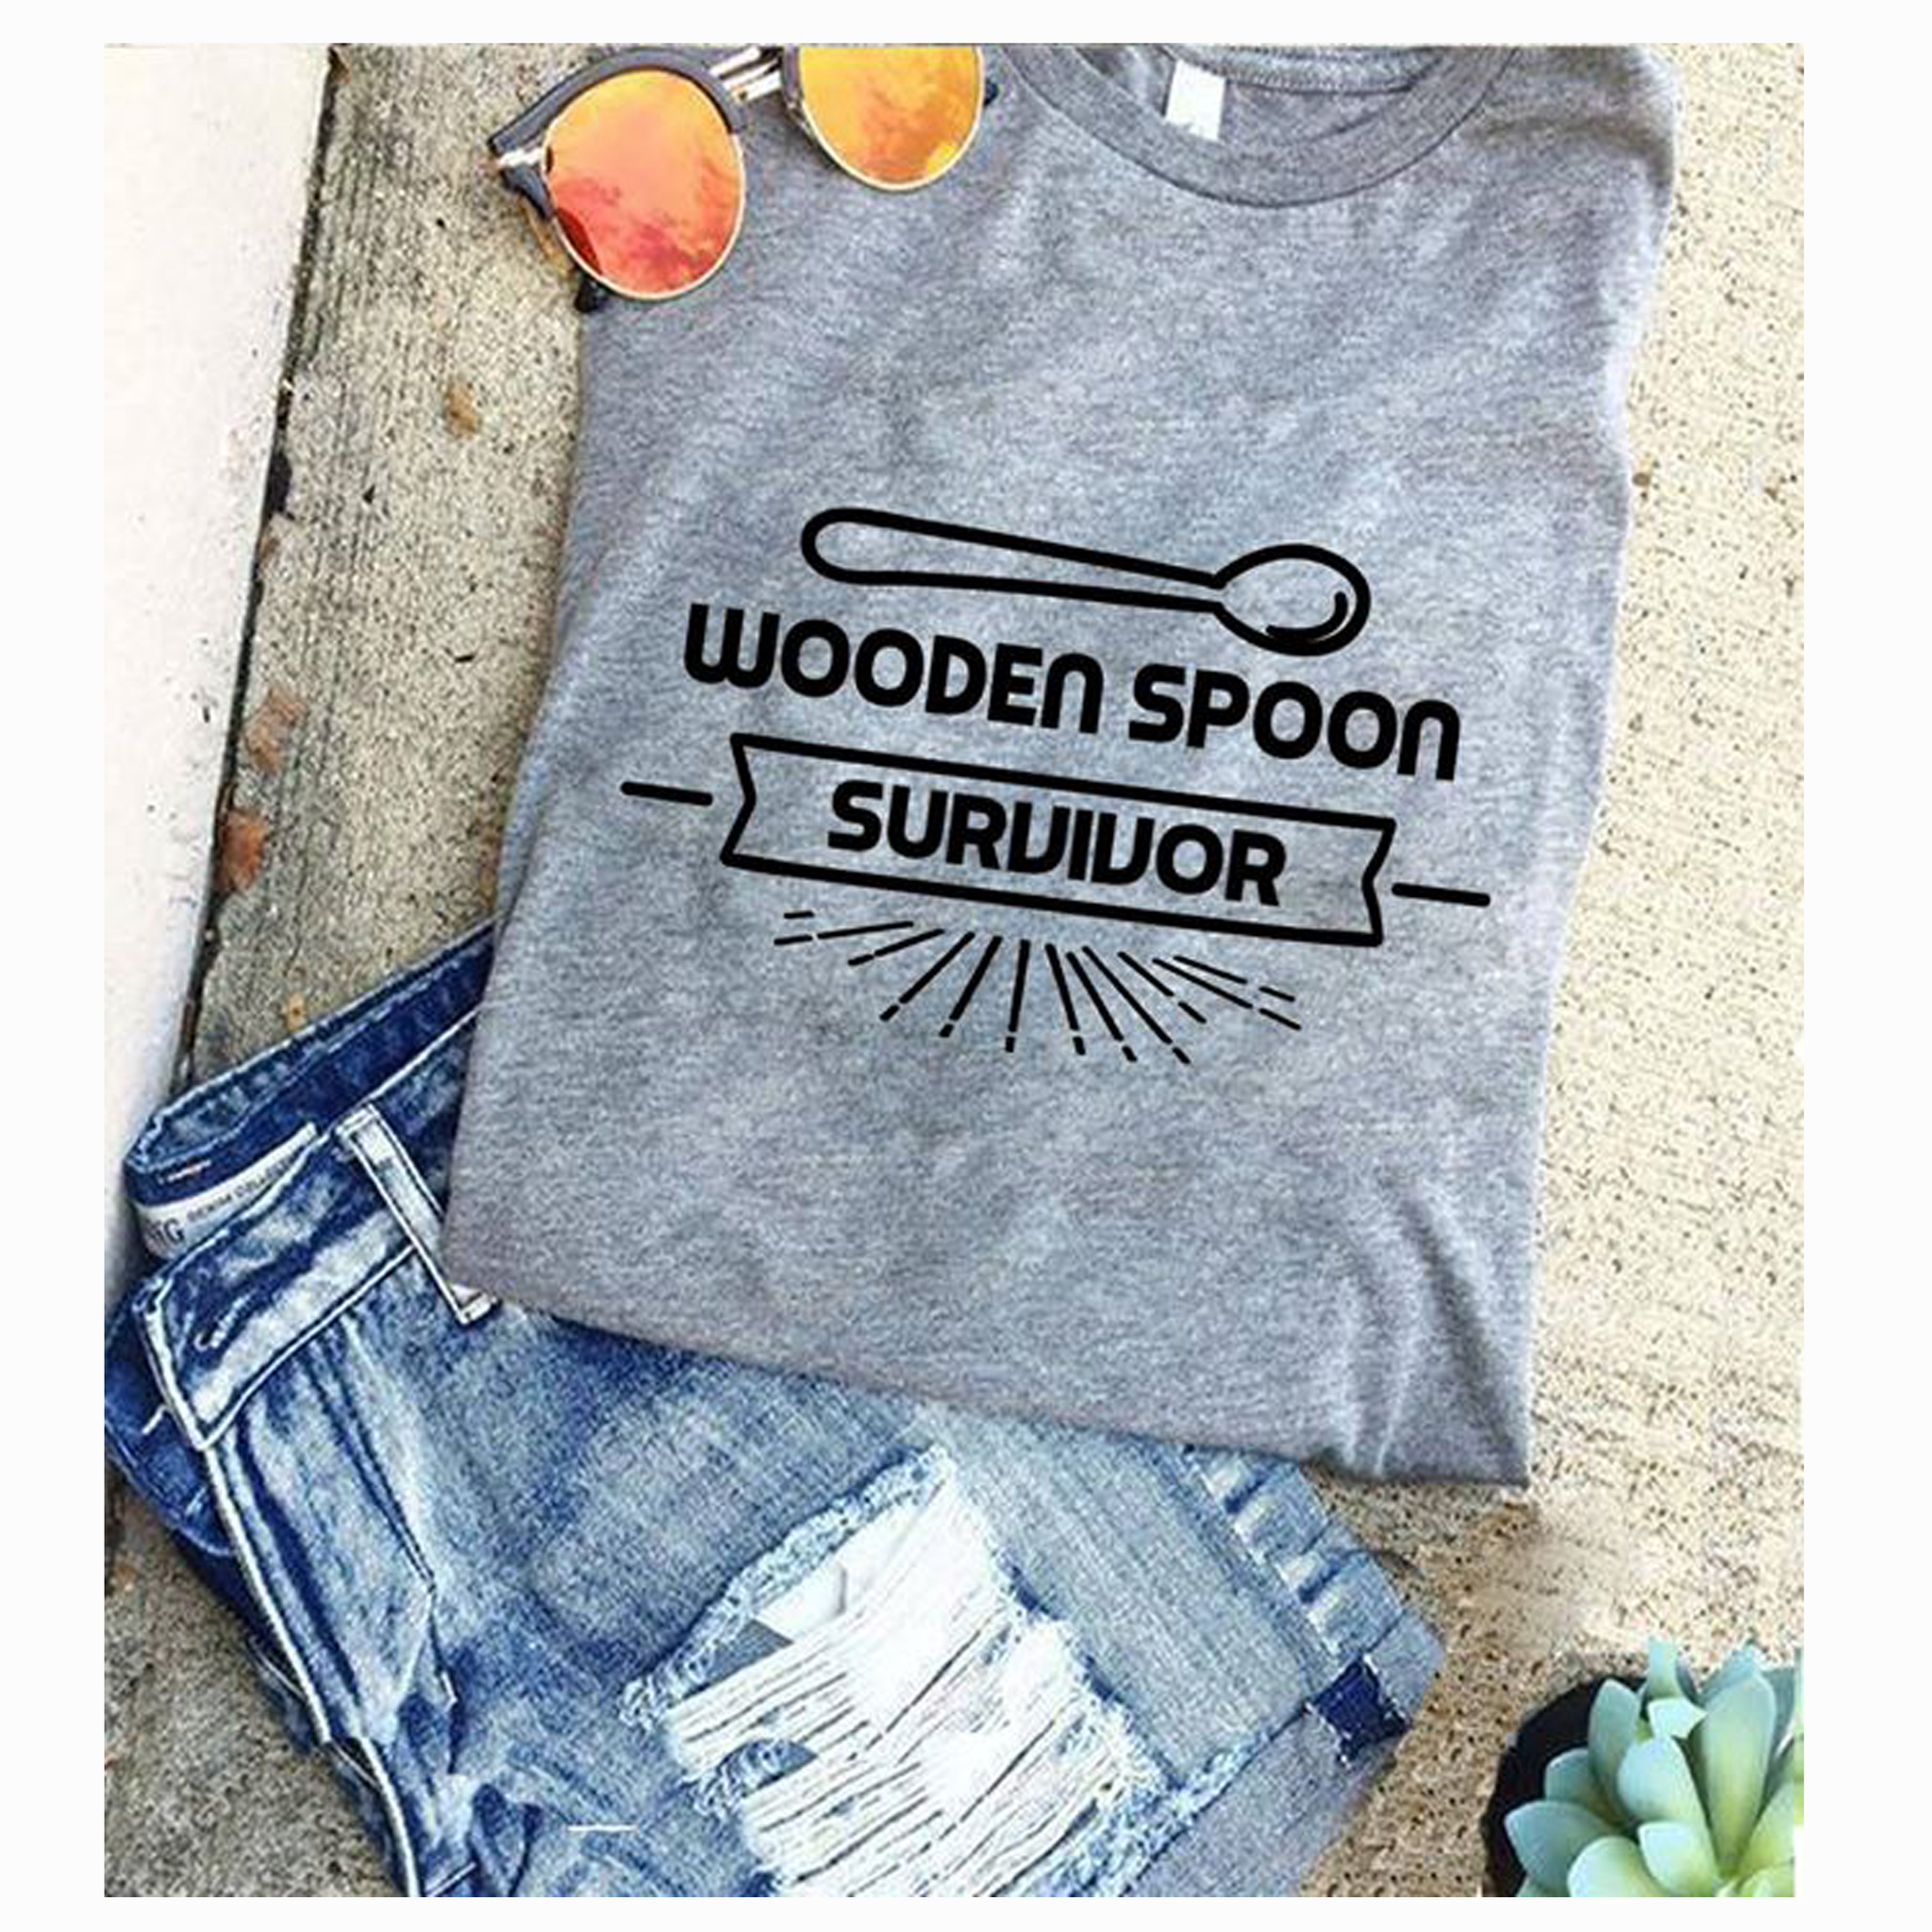 Wooden Spoon svg, Wooden Spoon, Wooden Spoon png, Wooden Spoon design eps, dxf, png, svg file